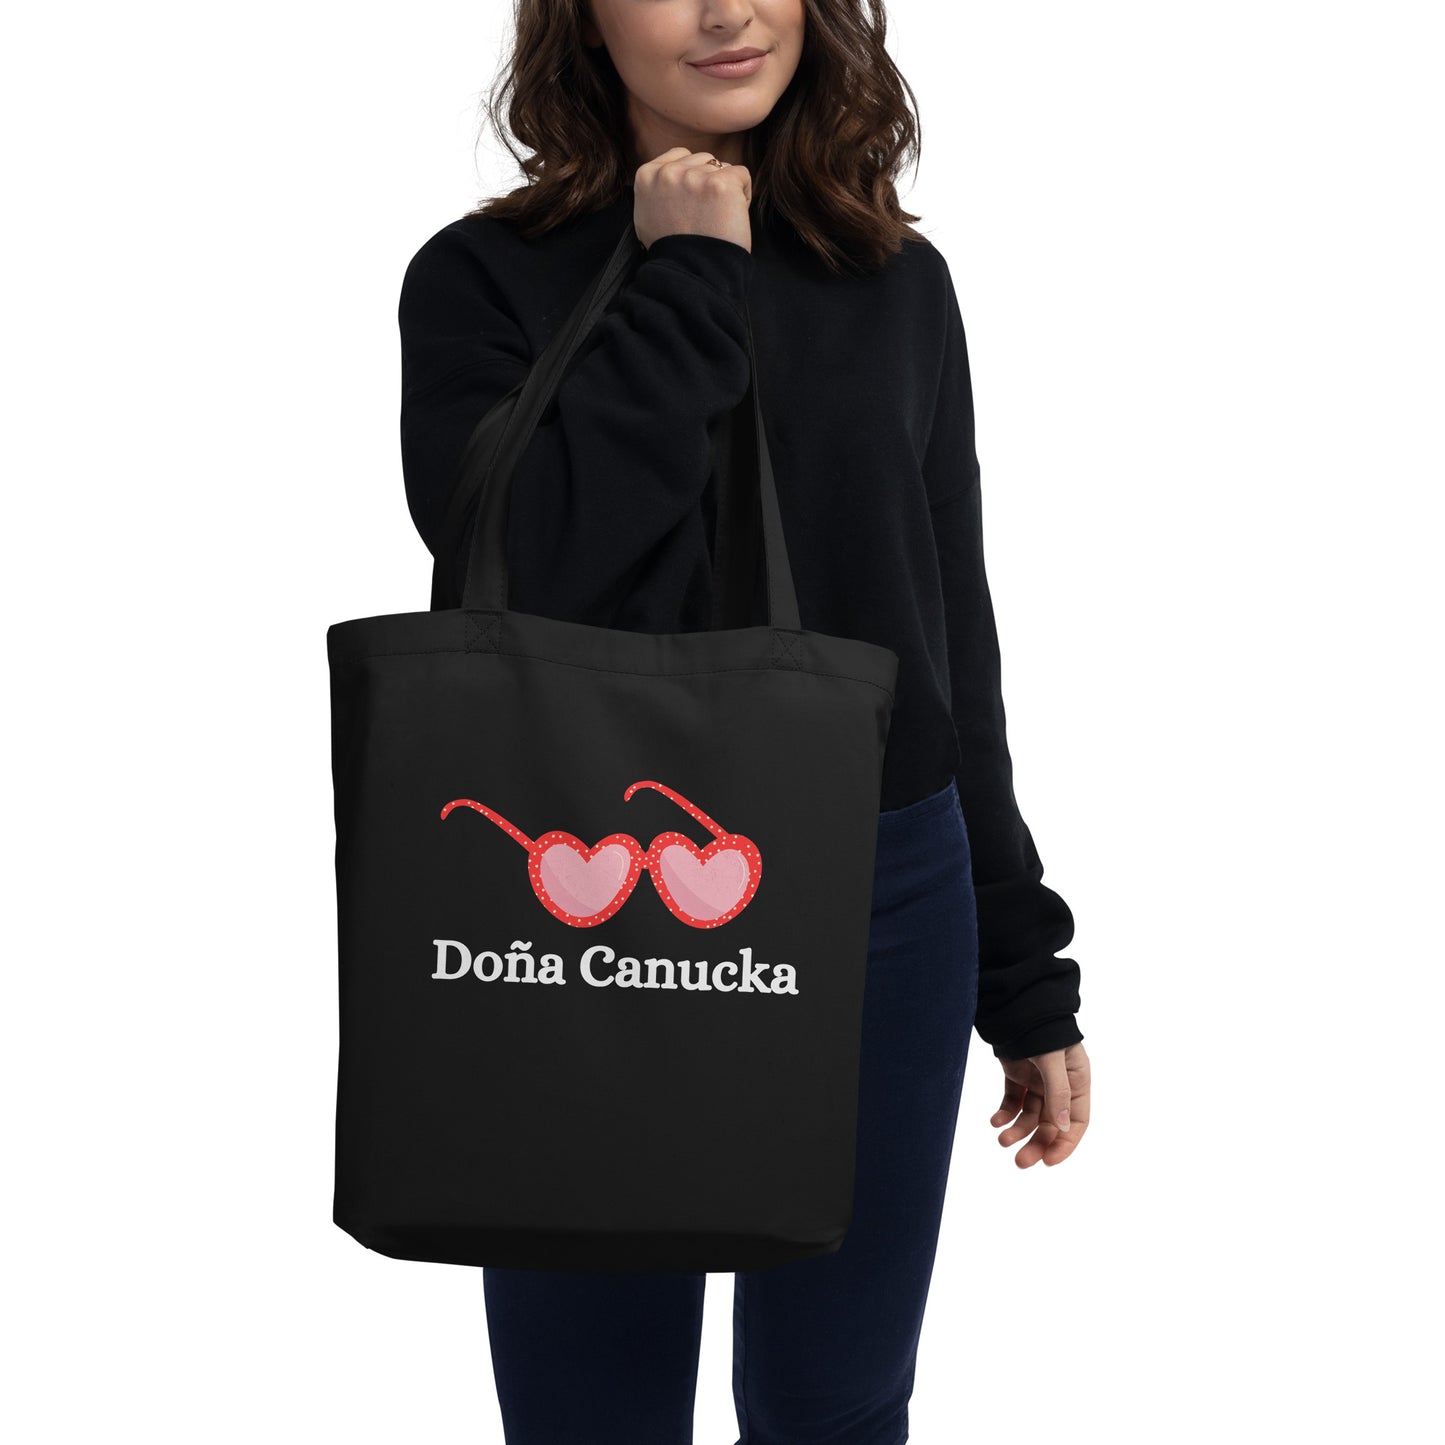 Doña Canucka Branded Black Eco Tote Bag